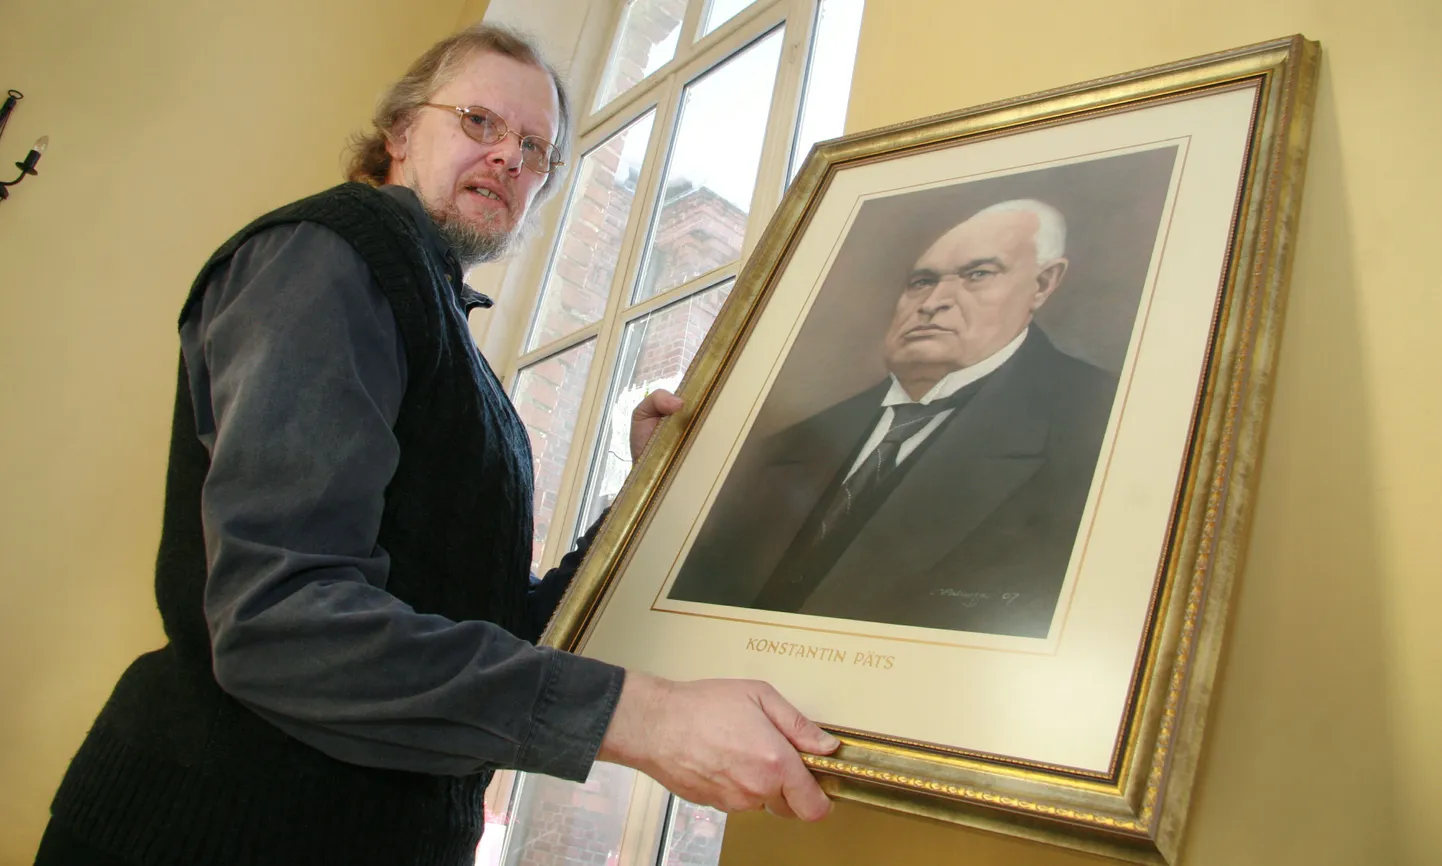 Kunstnik Vello Paluoja riigivanem Konstantin Pätsi portreega.